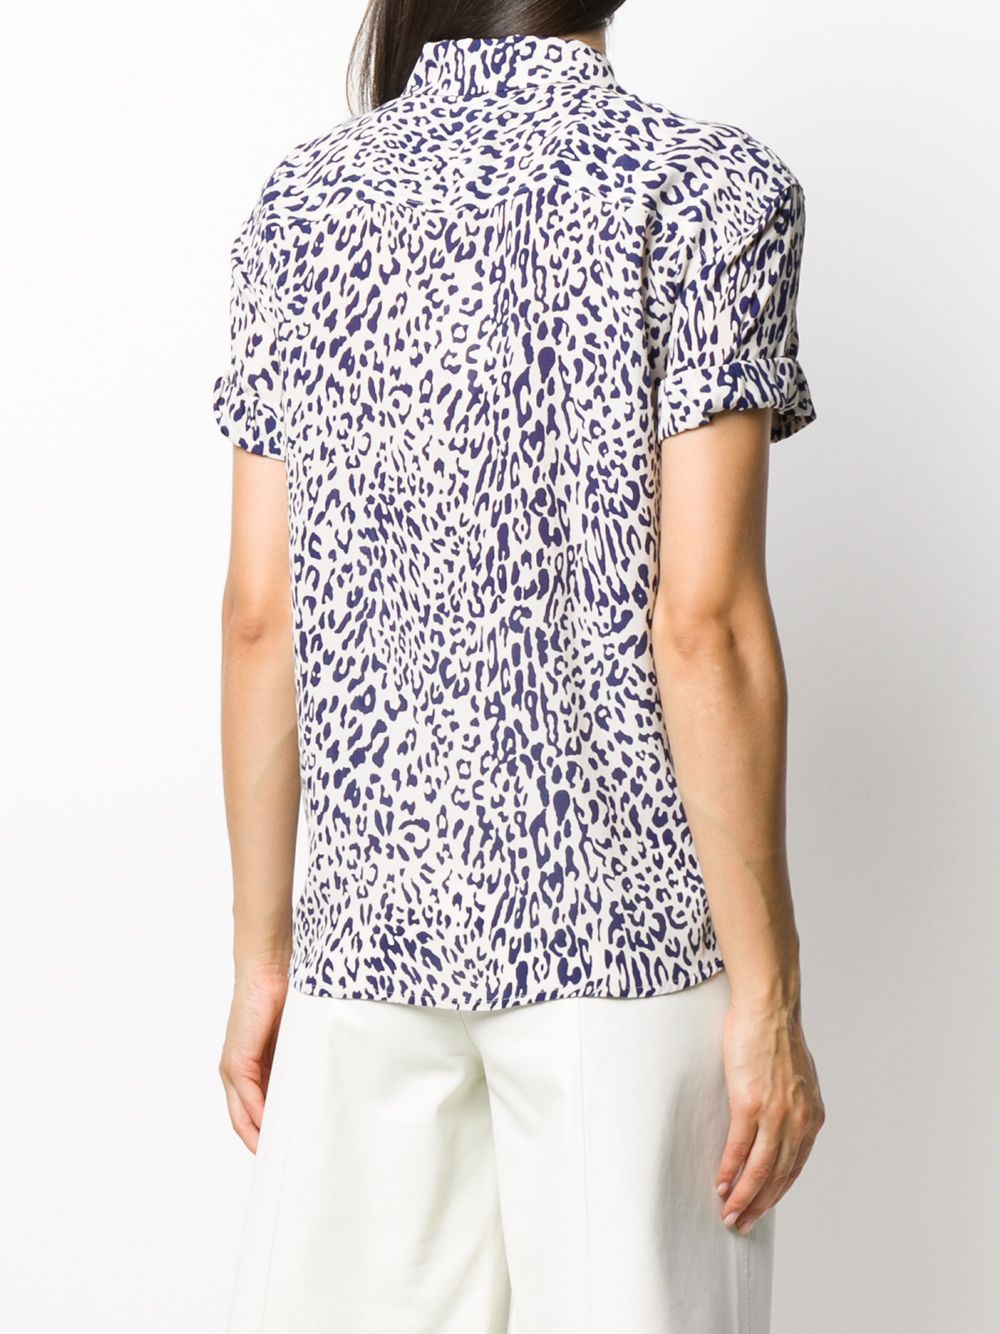 фото Baum und pferdgarten рубашка с леопардовым принтом